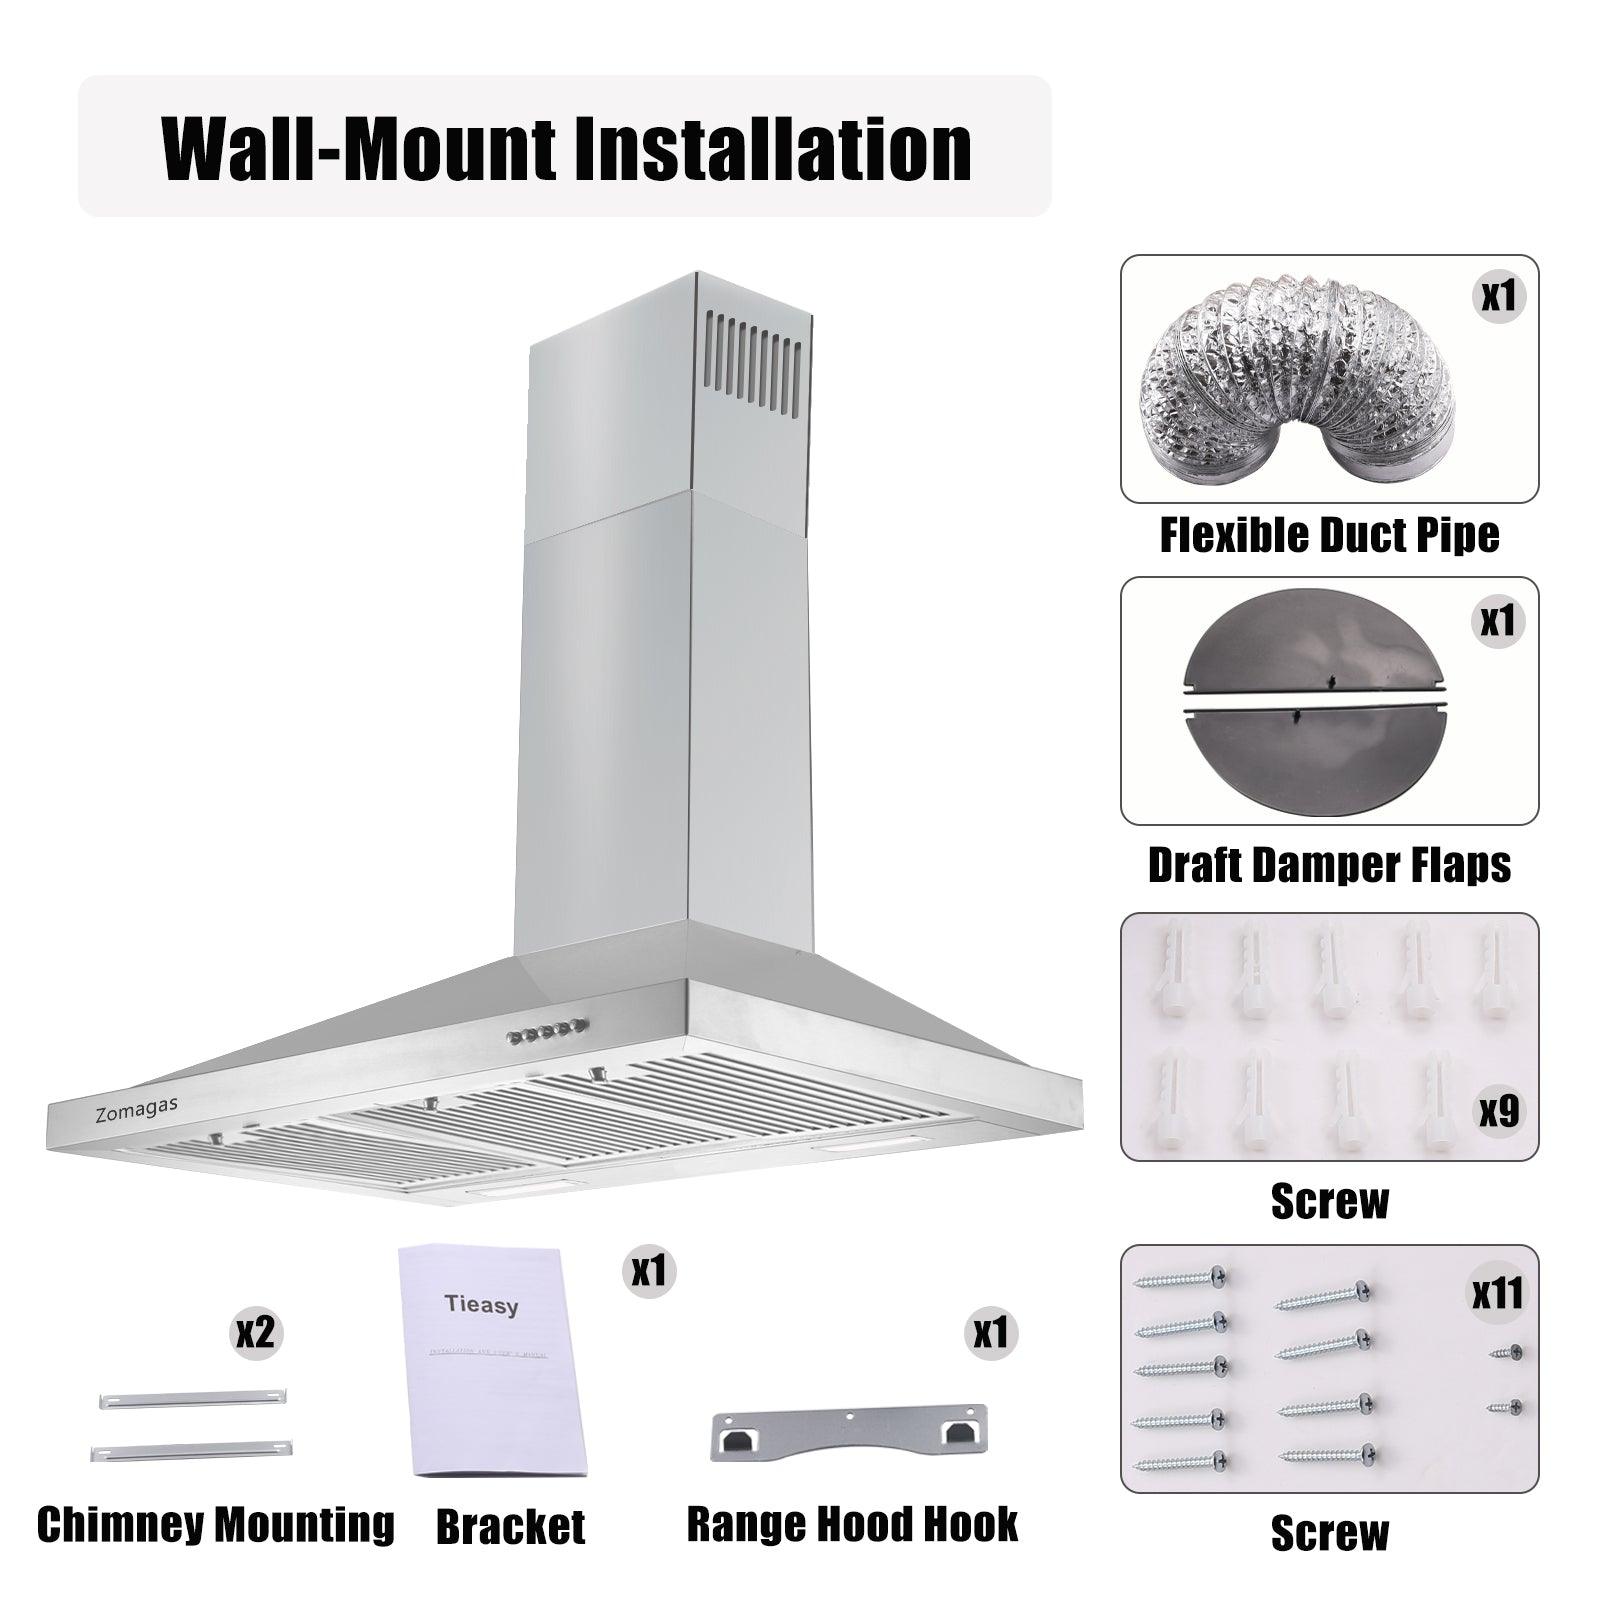 【Refurbished】Tieasy 36 inch Wall Mount Range Hood 3 Filters and 2 x 2W LED Lights - ZMG- 0190B